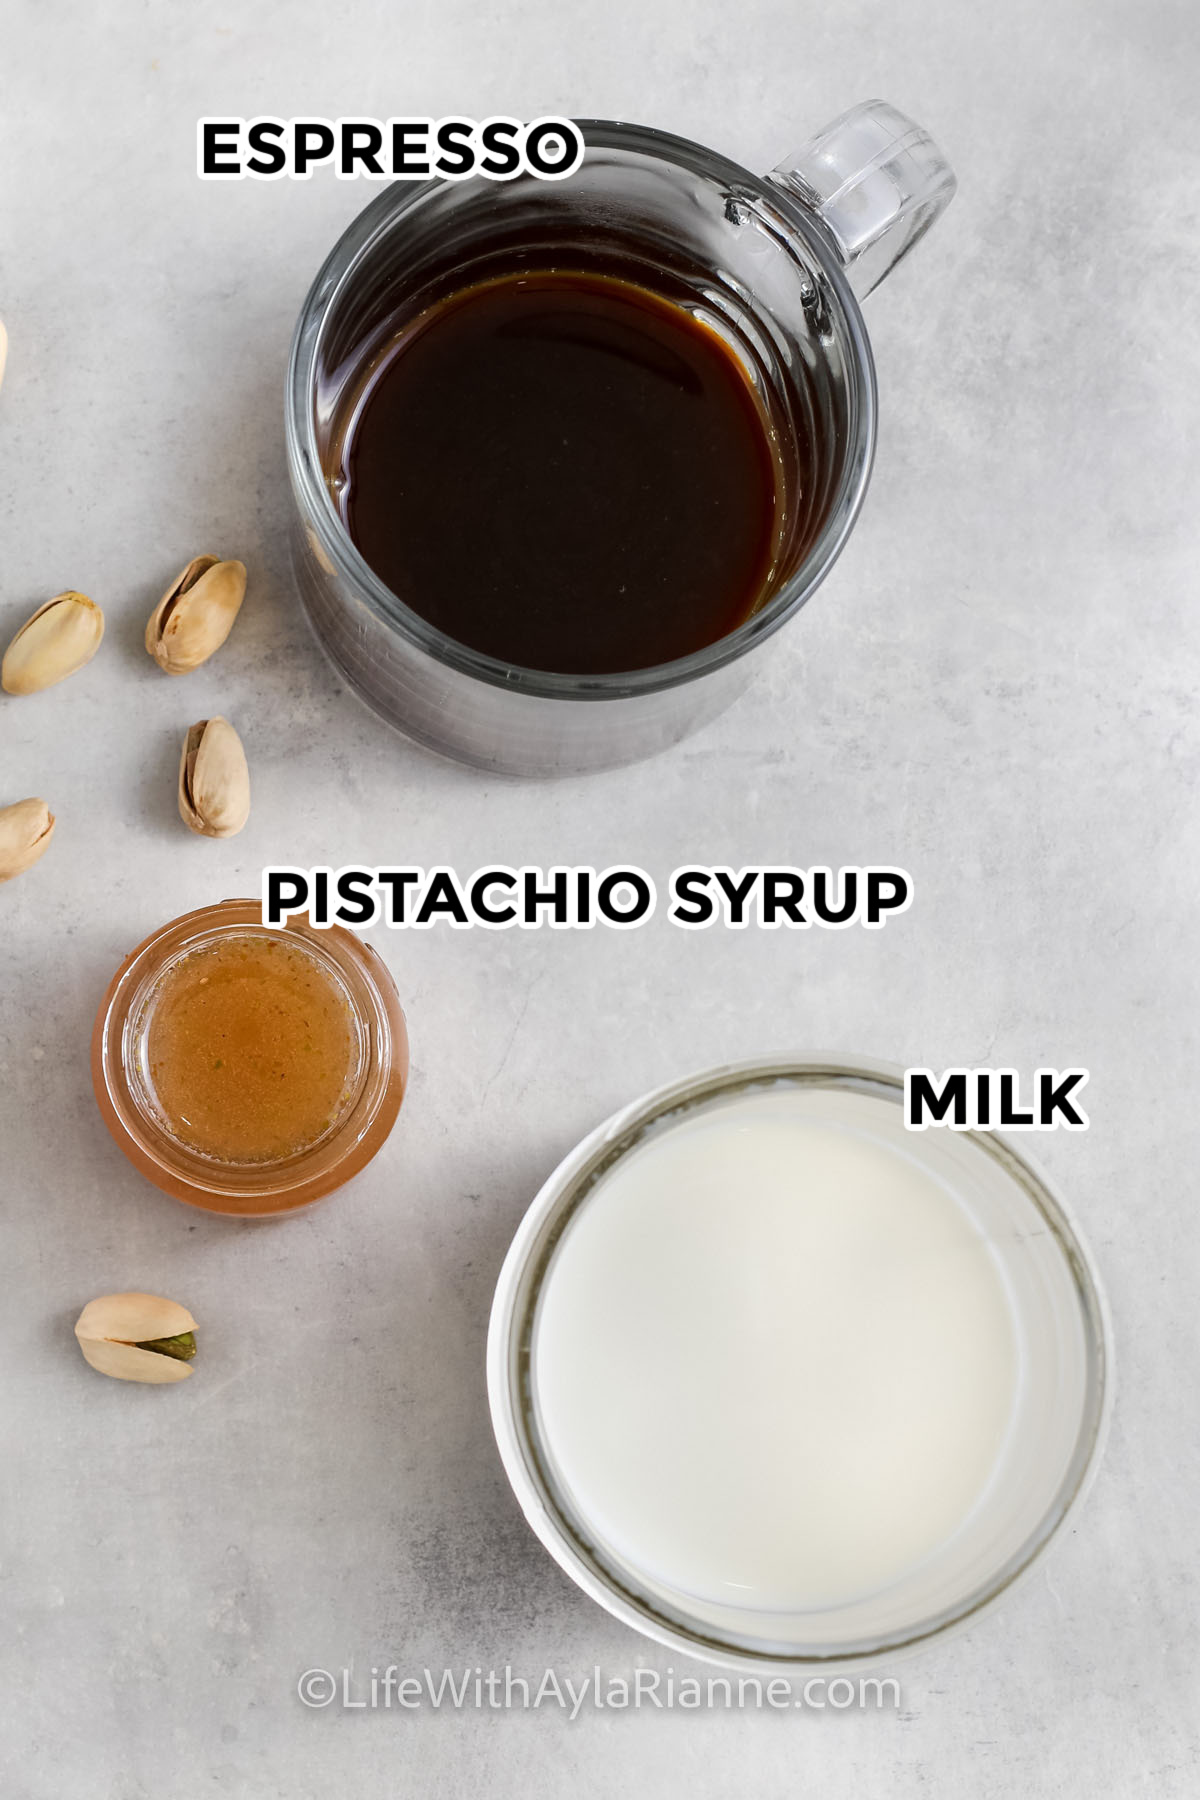 ingredients to make pistachio latte including espresso, pistachio syrup, and milk.